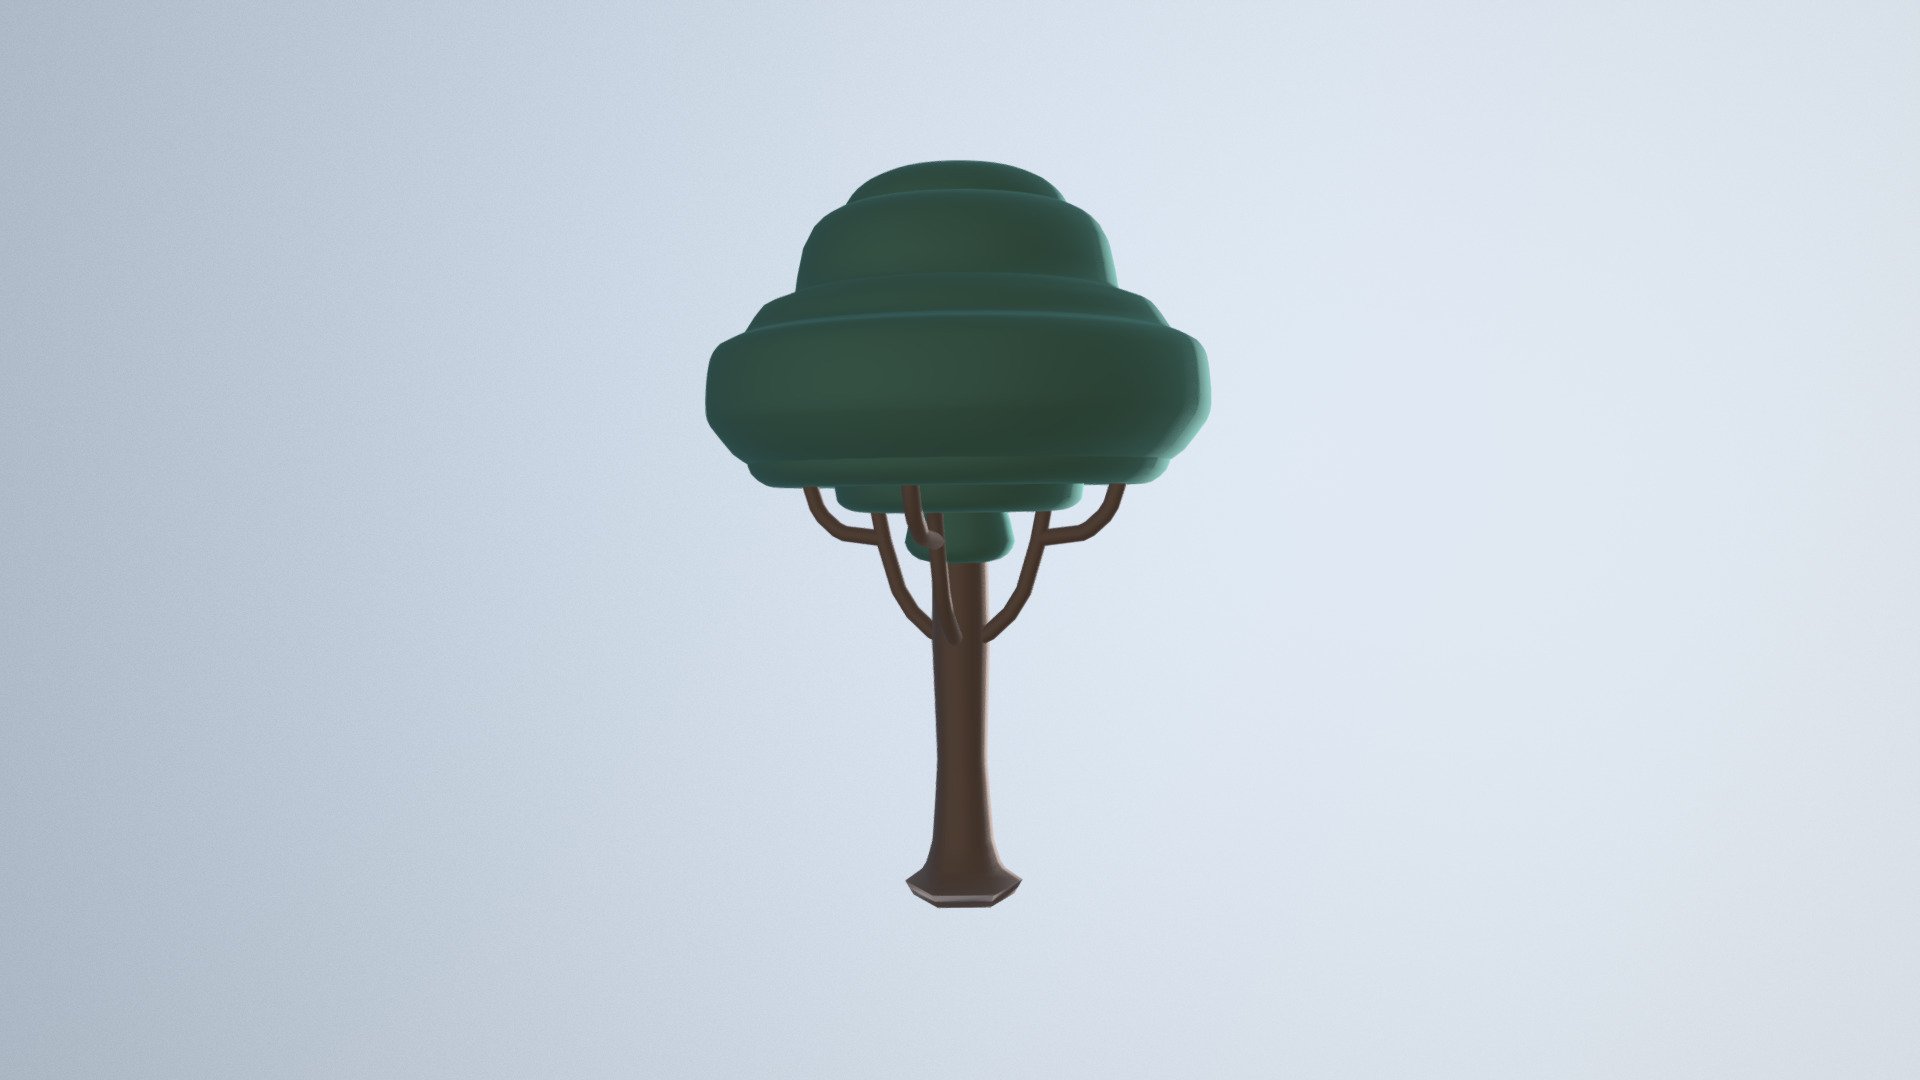 Isolated tree